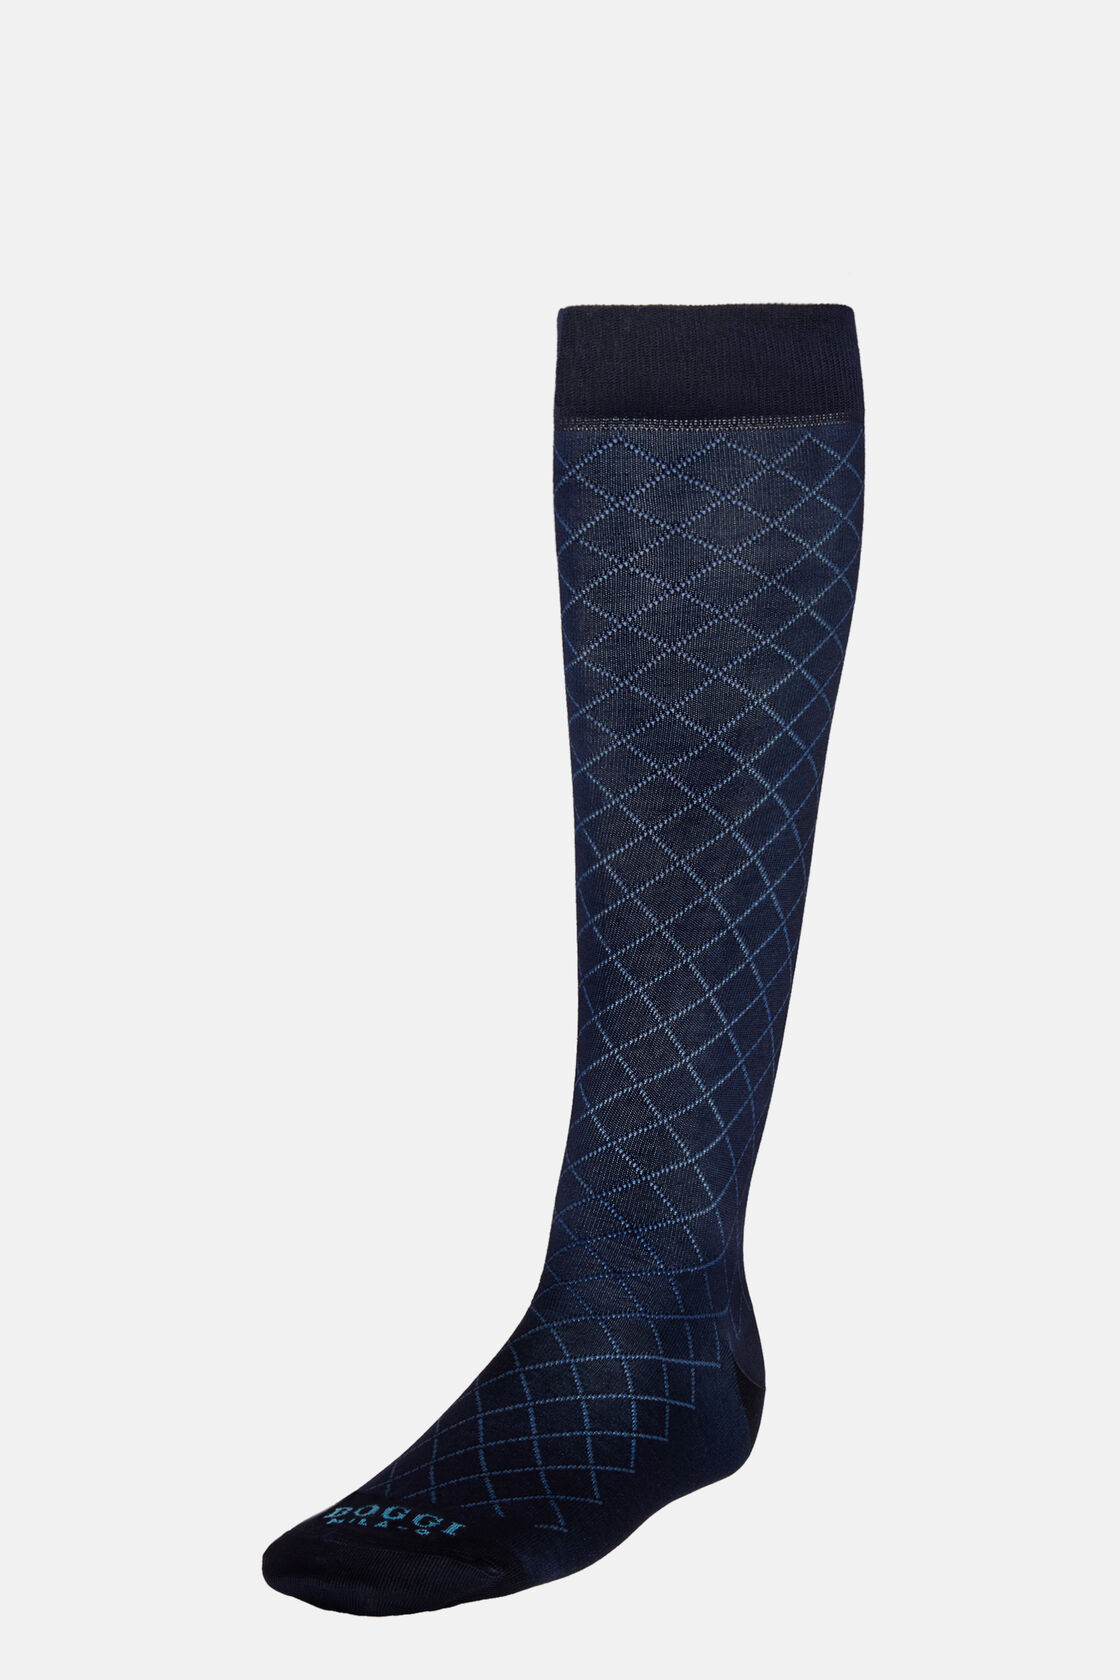 Geometric Cotton Blend Socks, Navy blue, hi-res